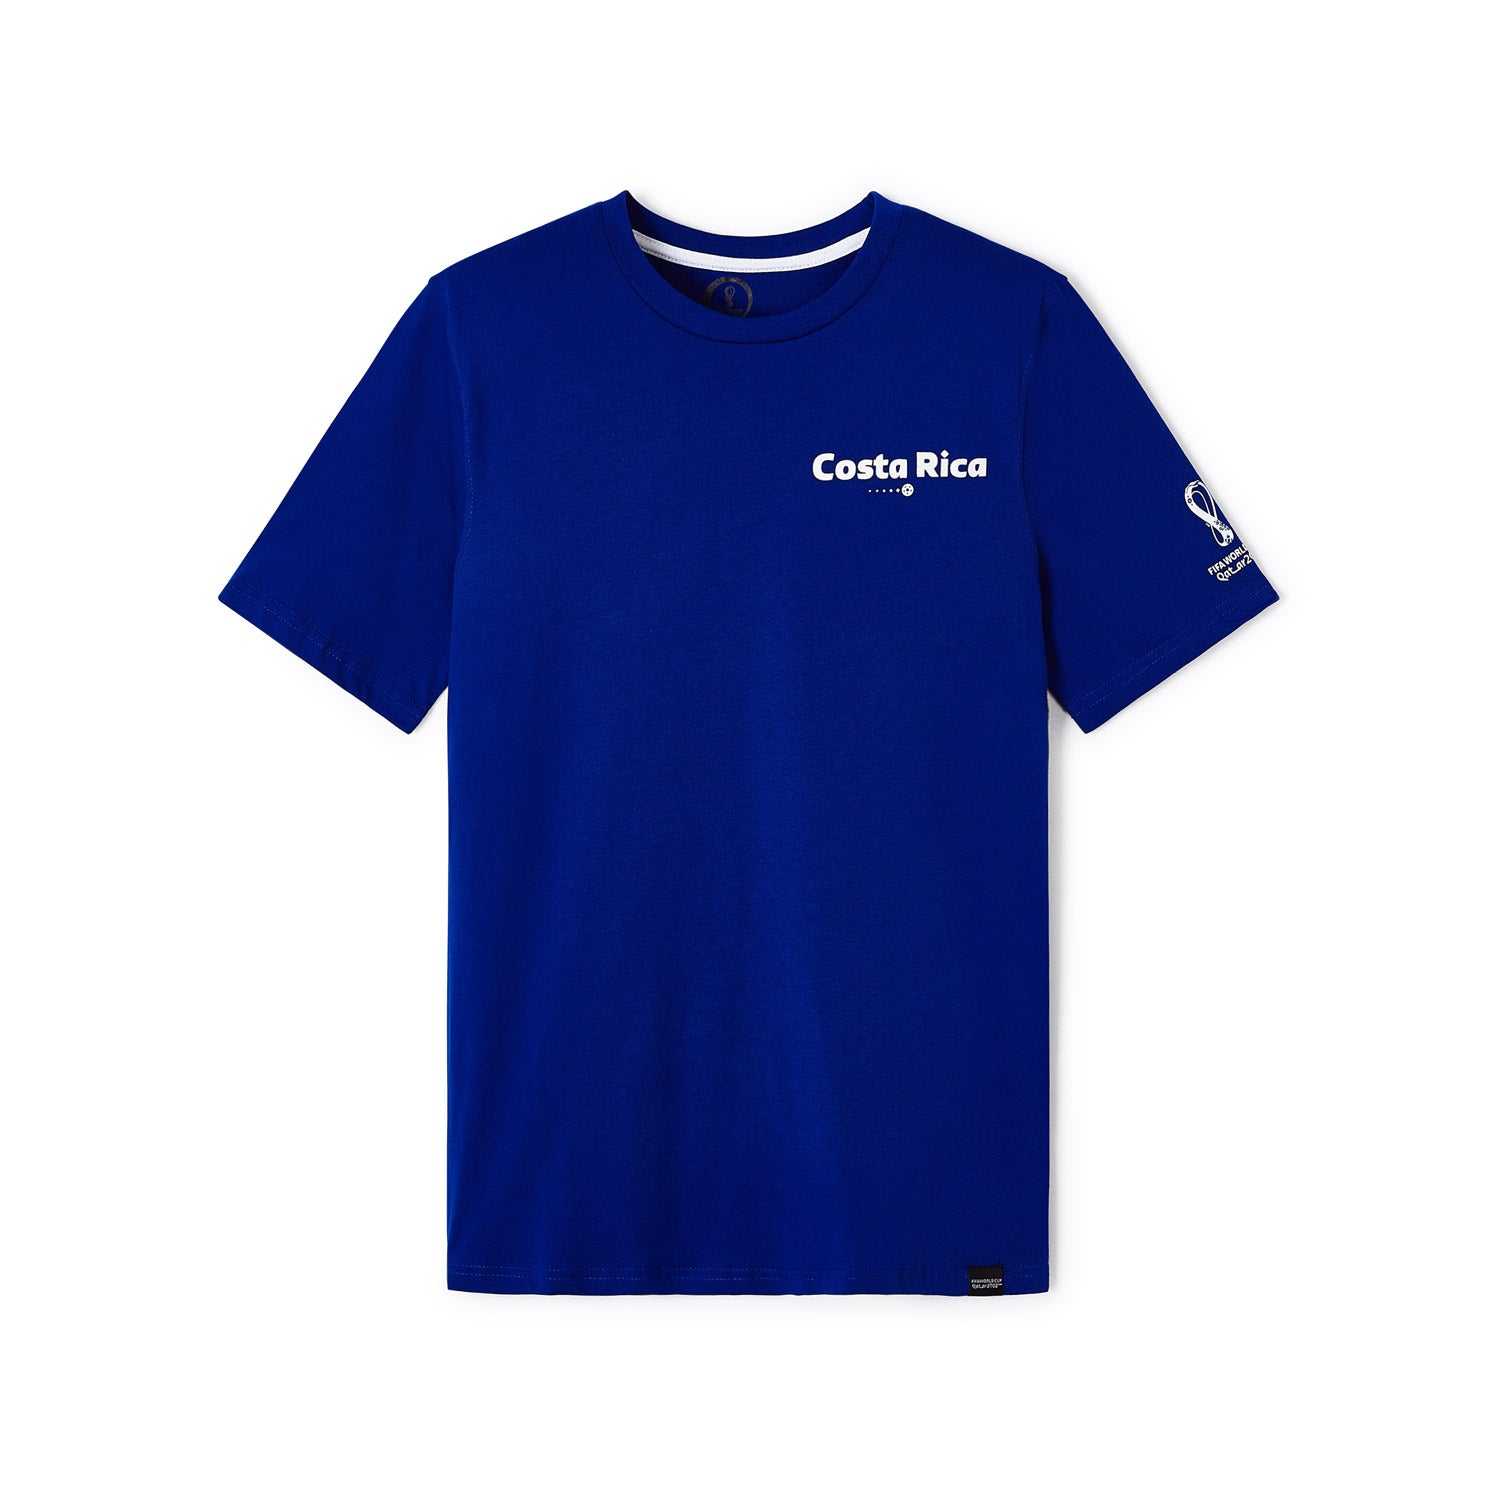 2022 World Cup Costa Rica Blue T-Shirt - Mens